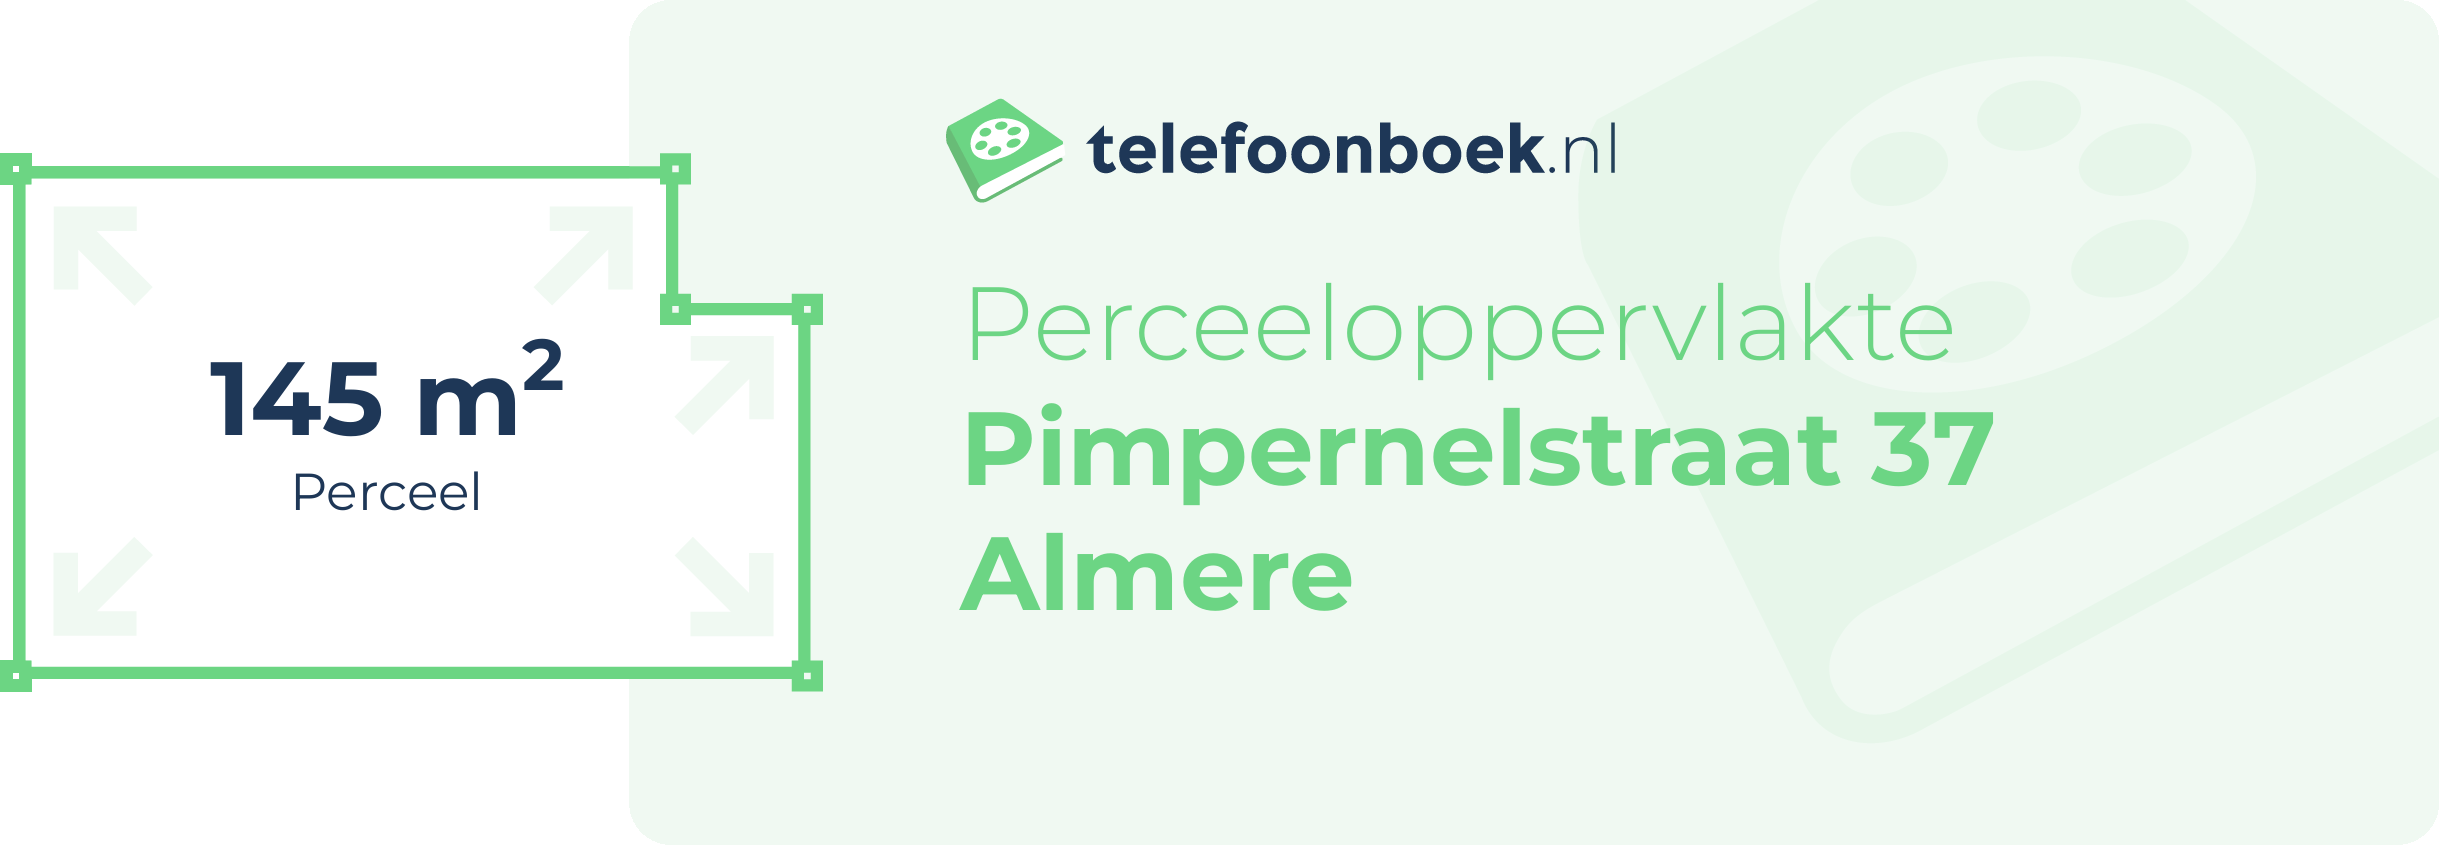 Perceeloppervlakte Pimpernelstraat 37 Almere